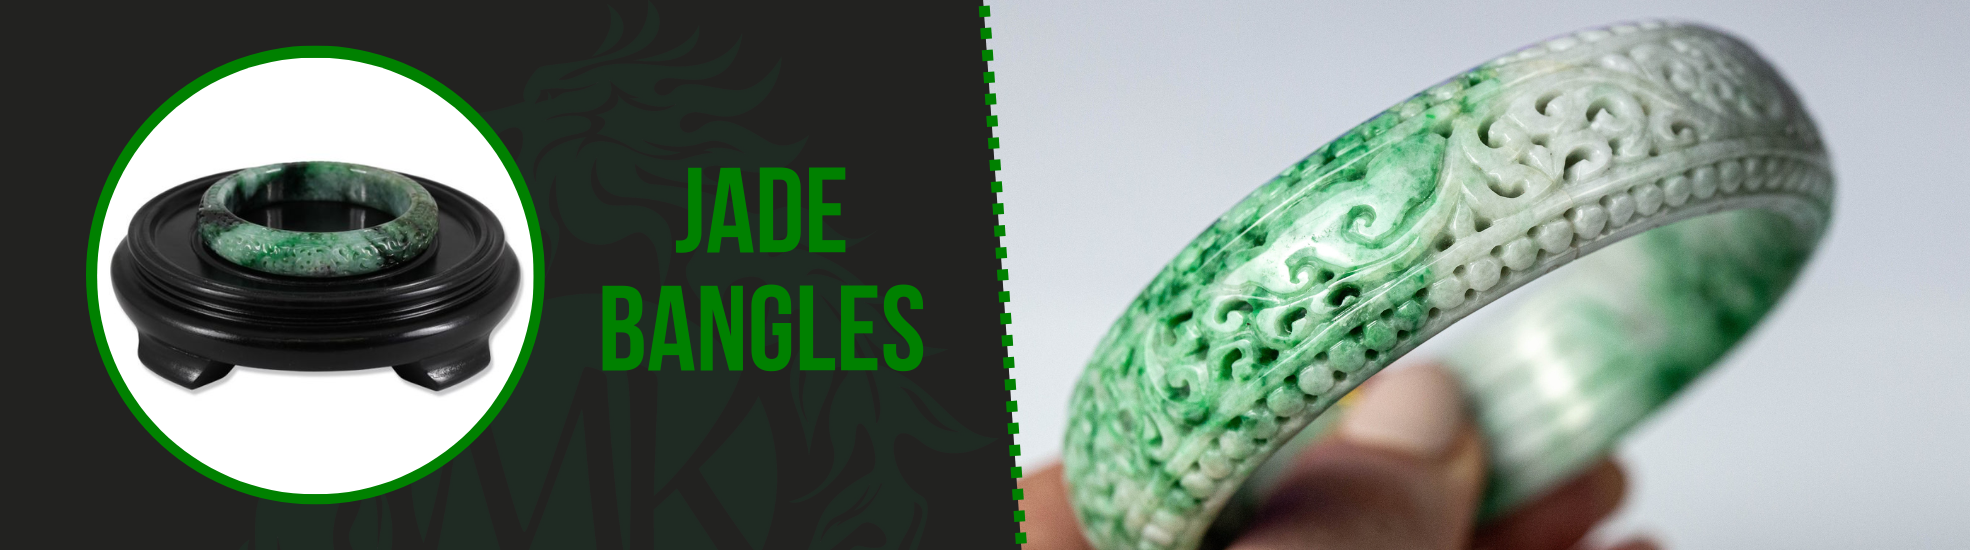 Mason Kay Natural Jade Bangle Bracelets - Let Us Help You Find The Right Size Jade Bangle